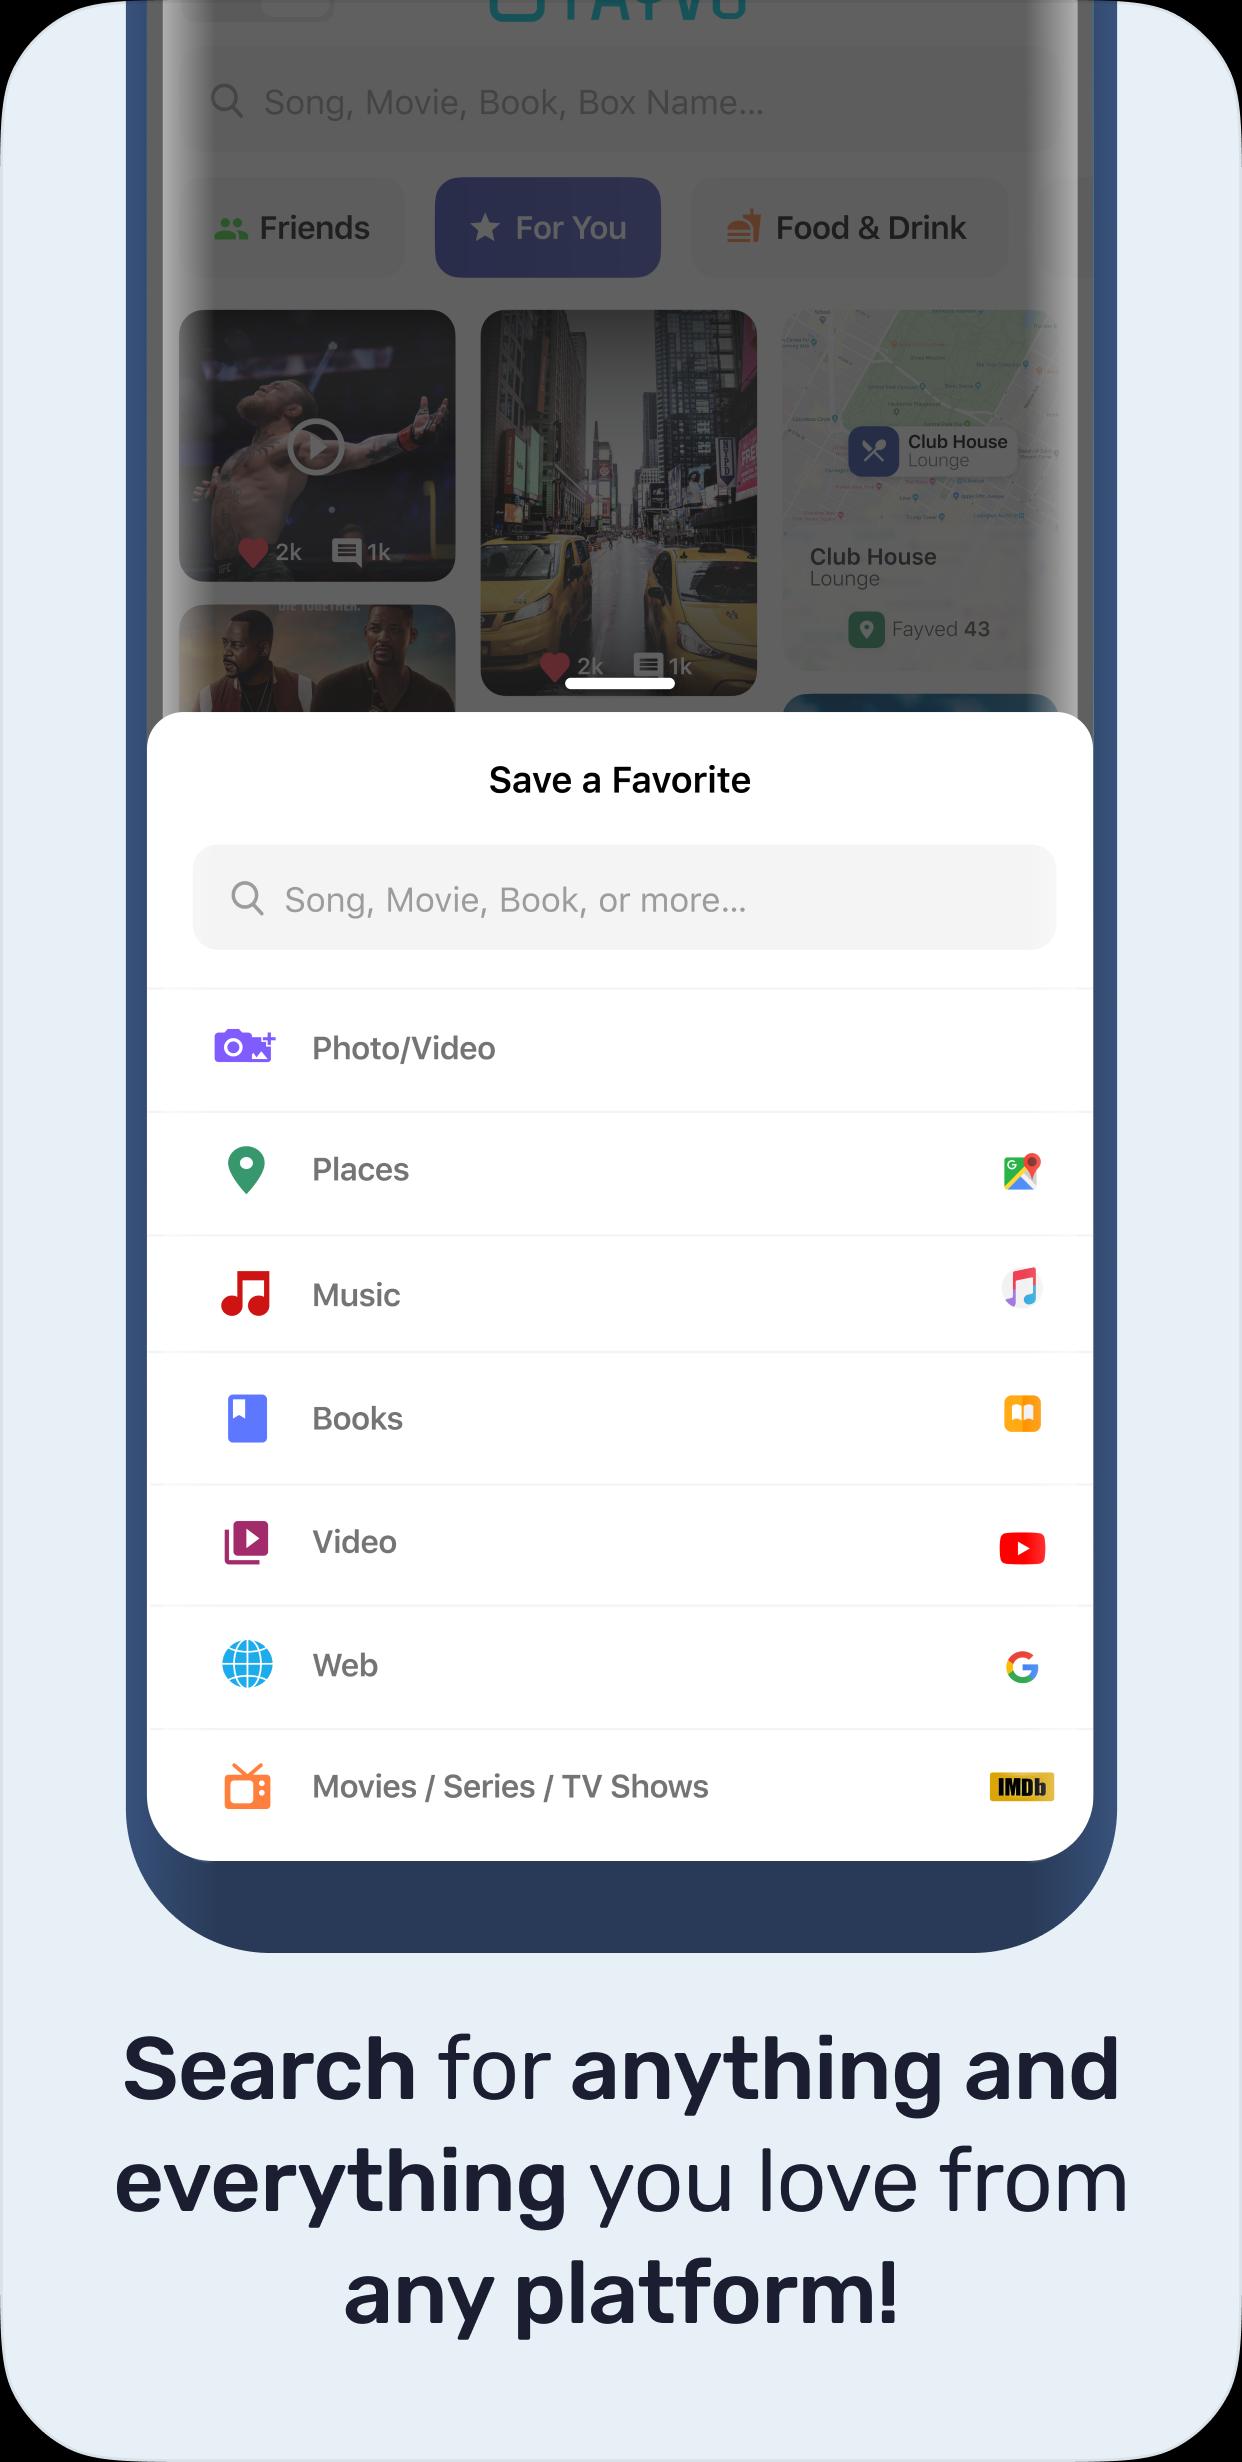 Fayvo Social Networking App: Share your Favorites 2.2.0 Screenshot 2